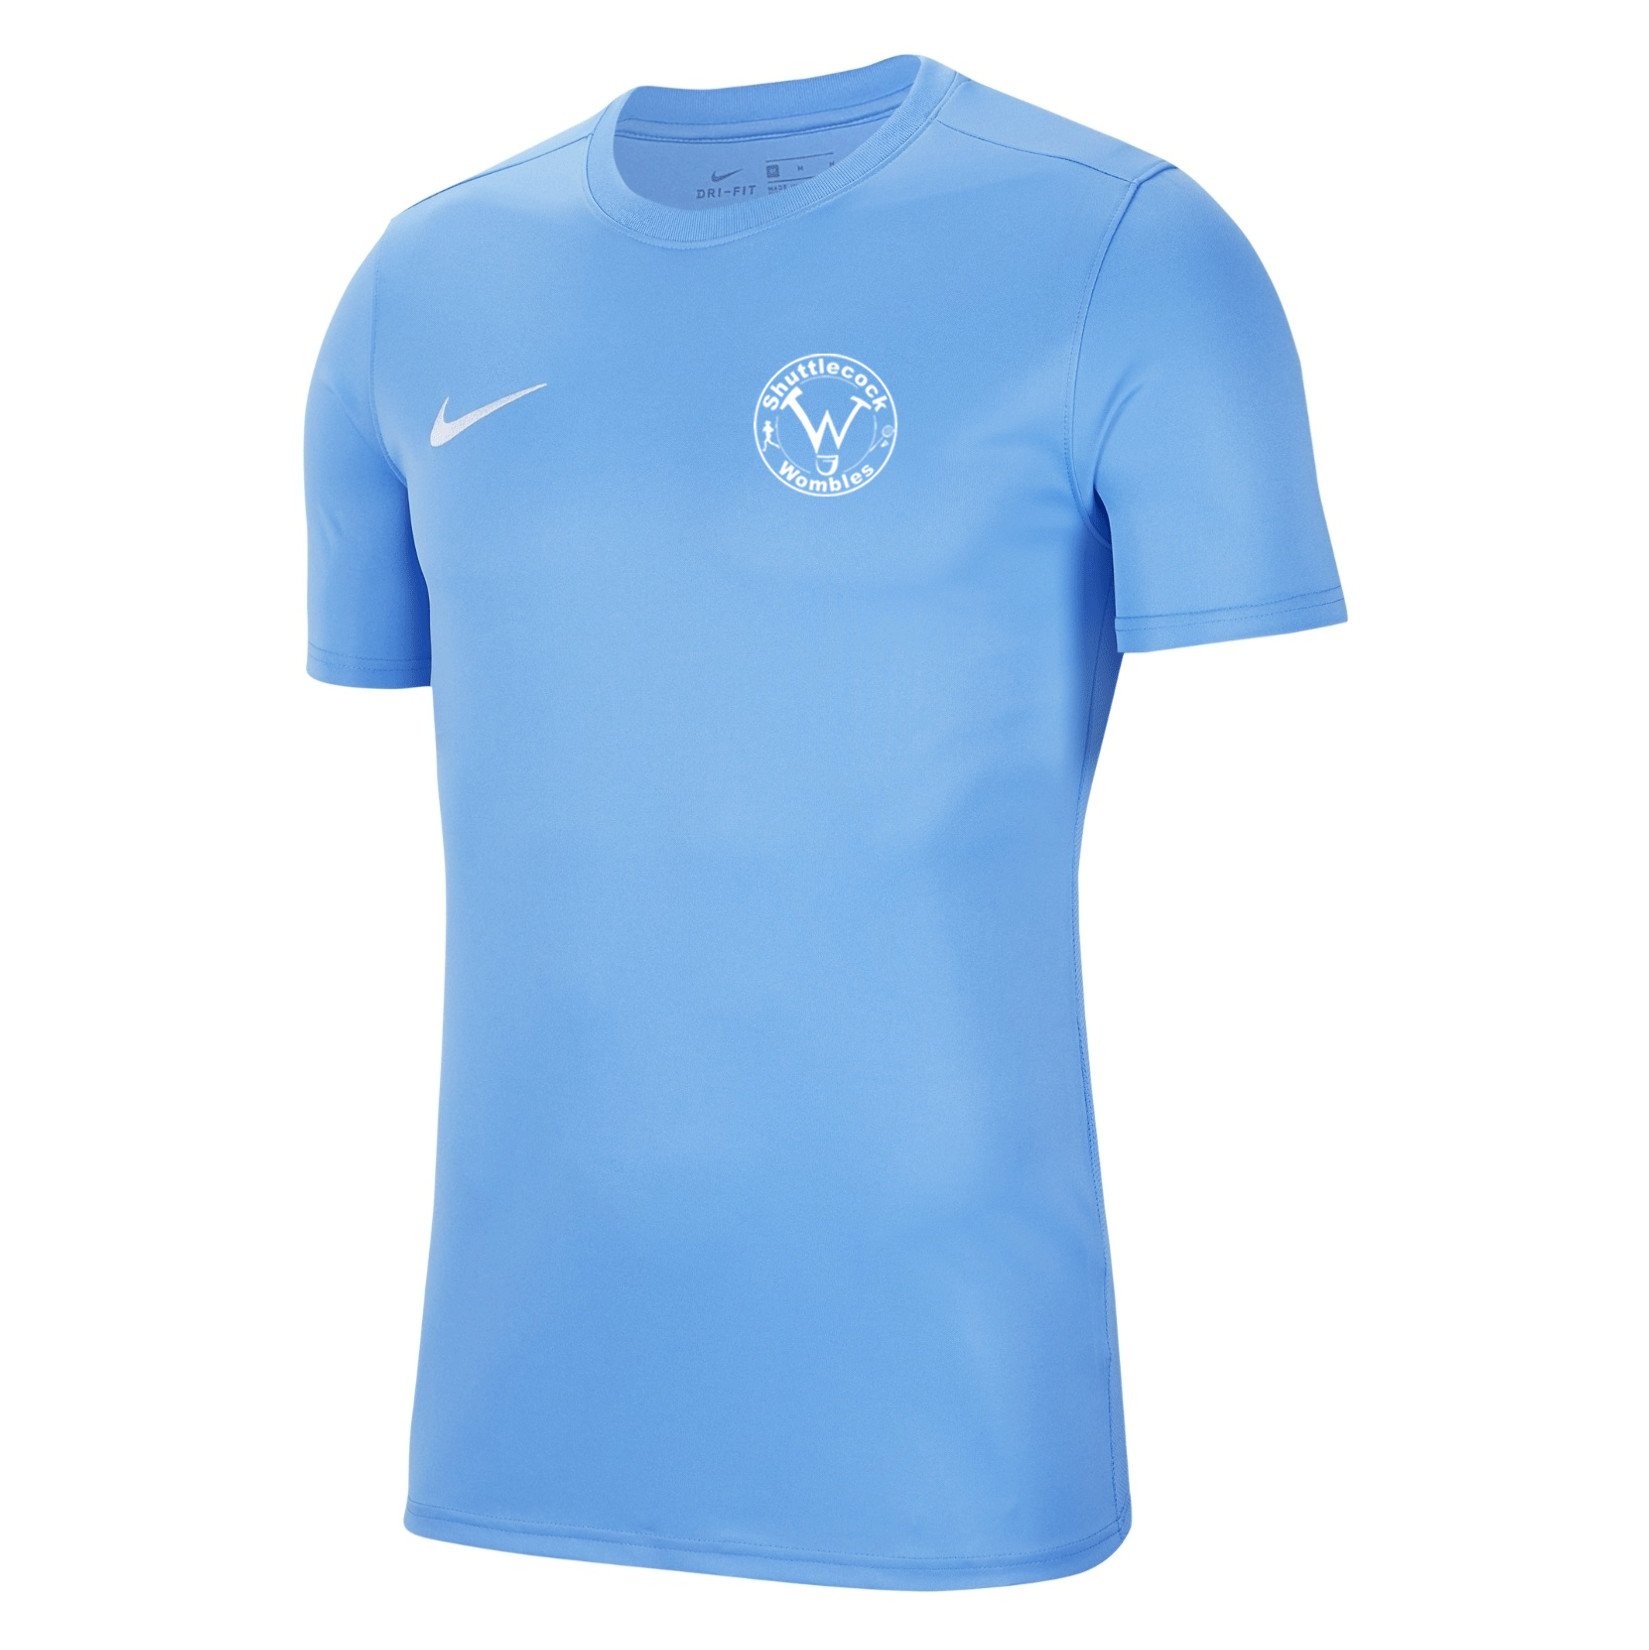 Nike Park VII Dri-FIT Short Sleeve Shirt University Blue-White